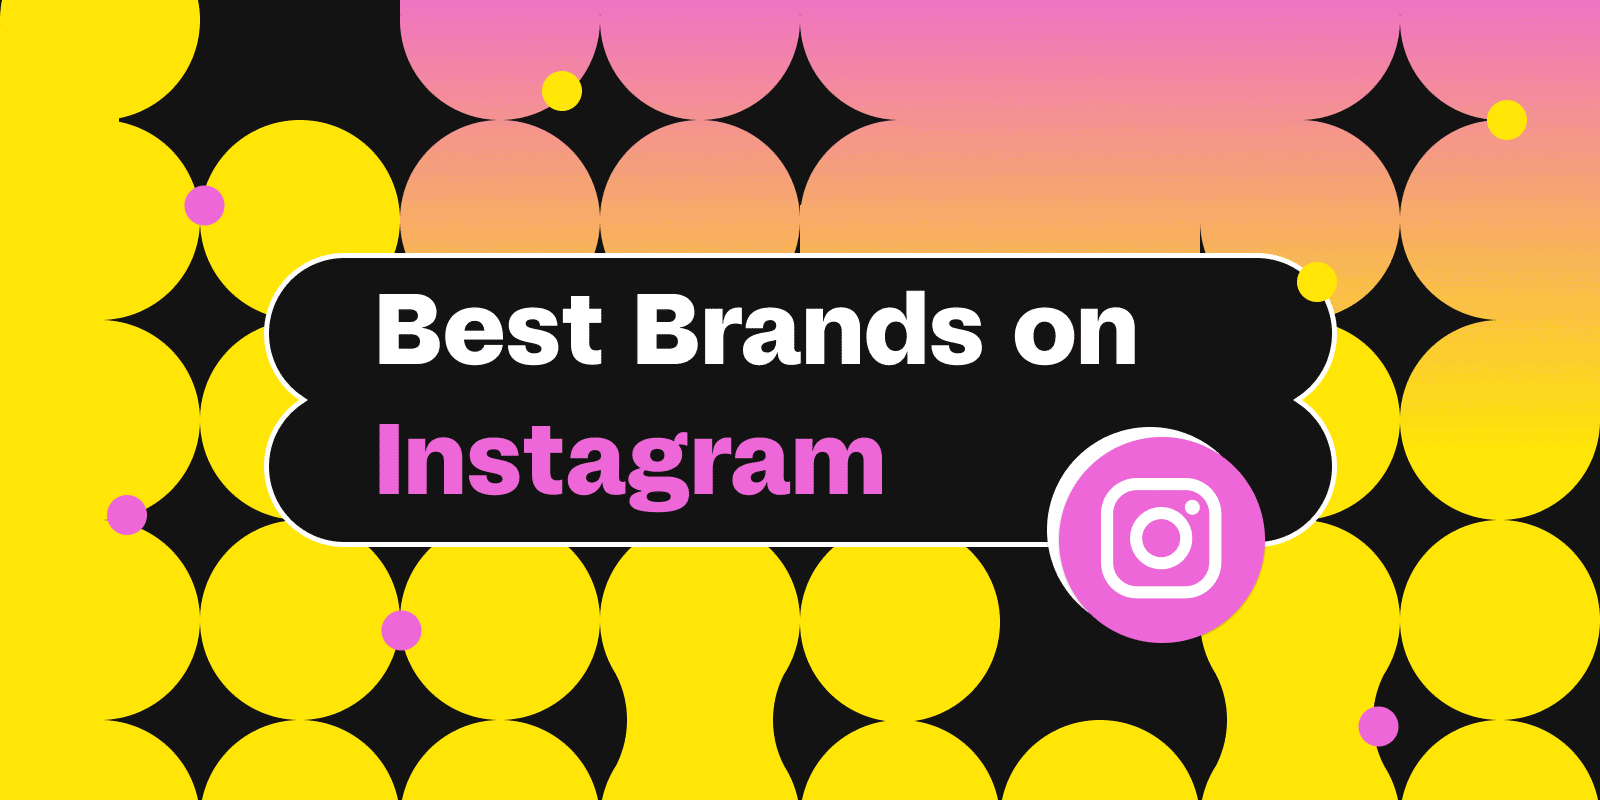 18 of the Best Brands on Instagram